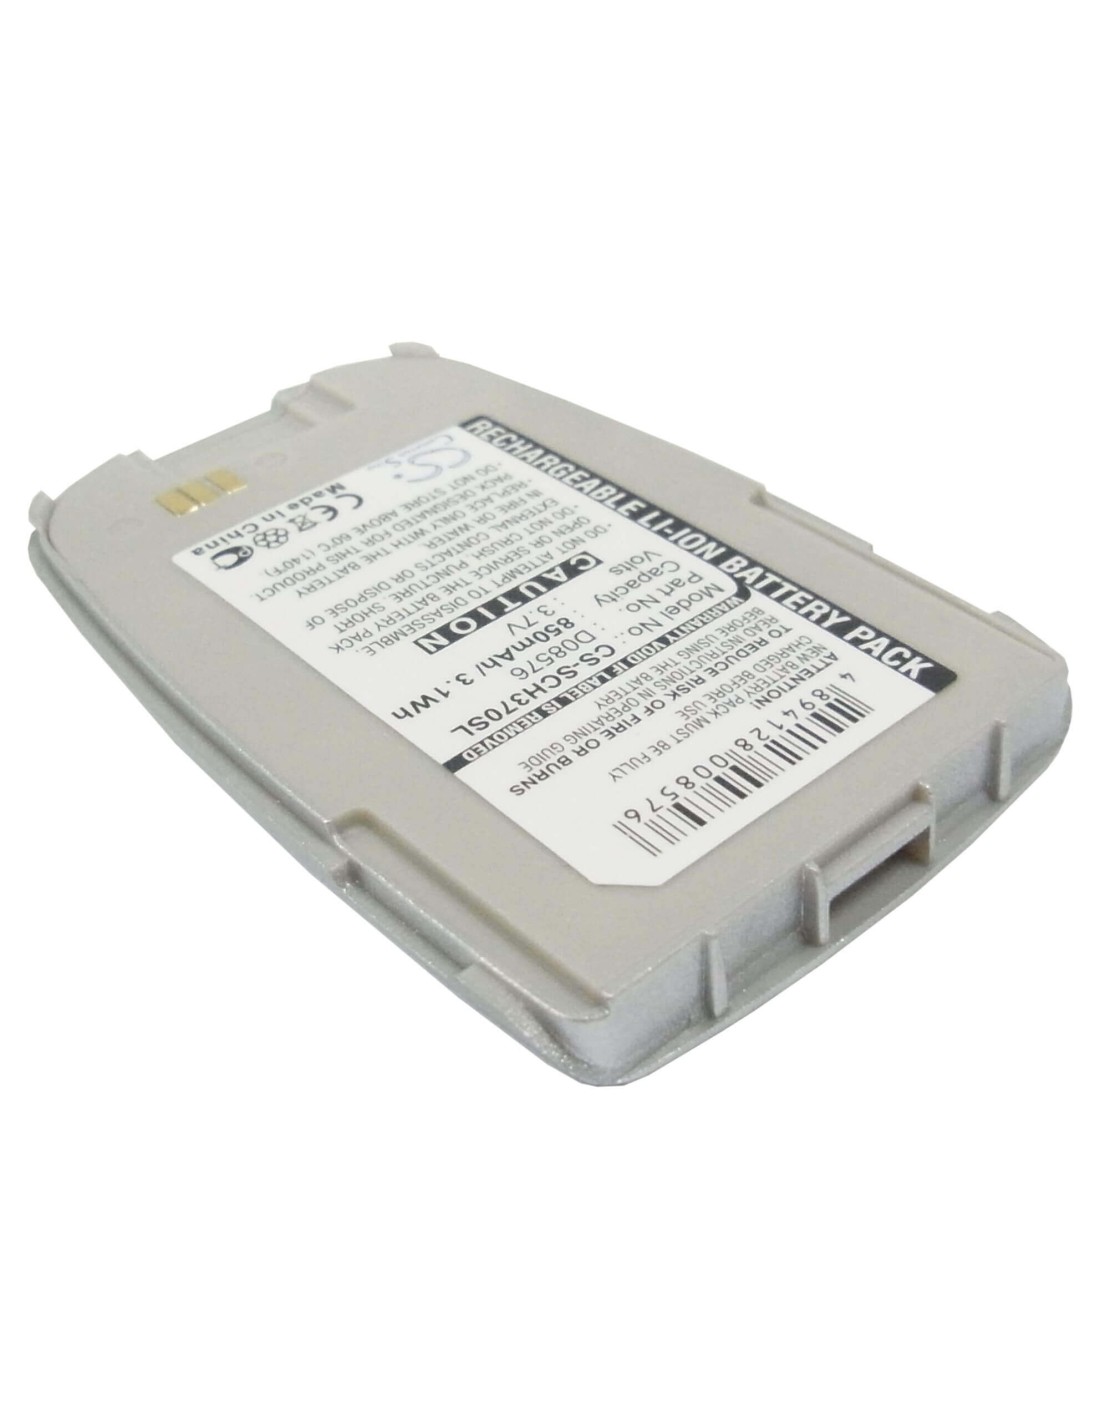 Battery for Samsung SCH-E370 3.7V, 850mAh - 3.15Wh